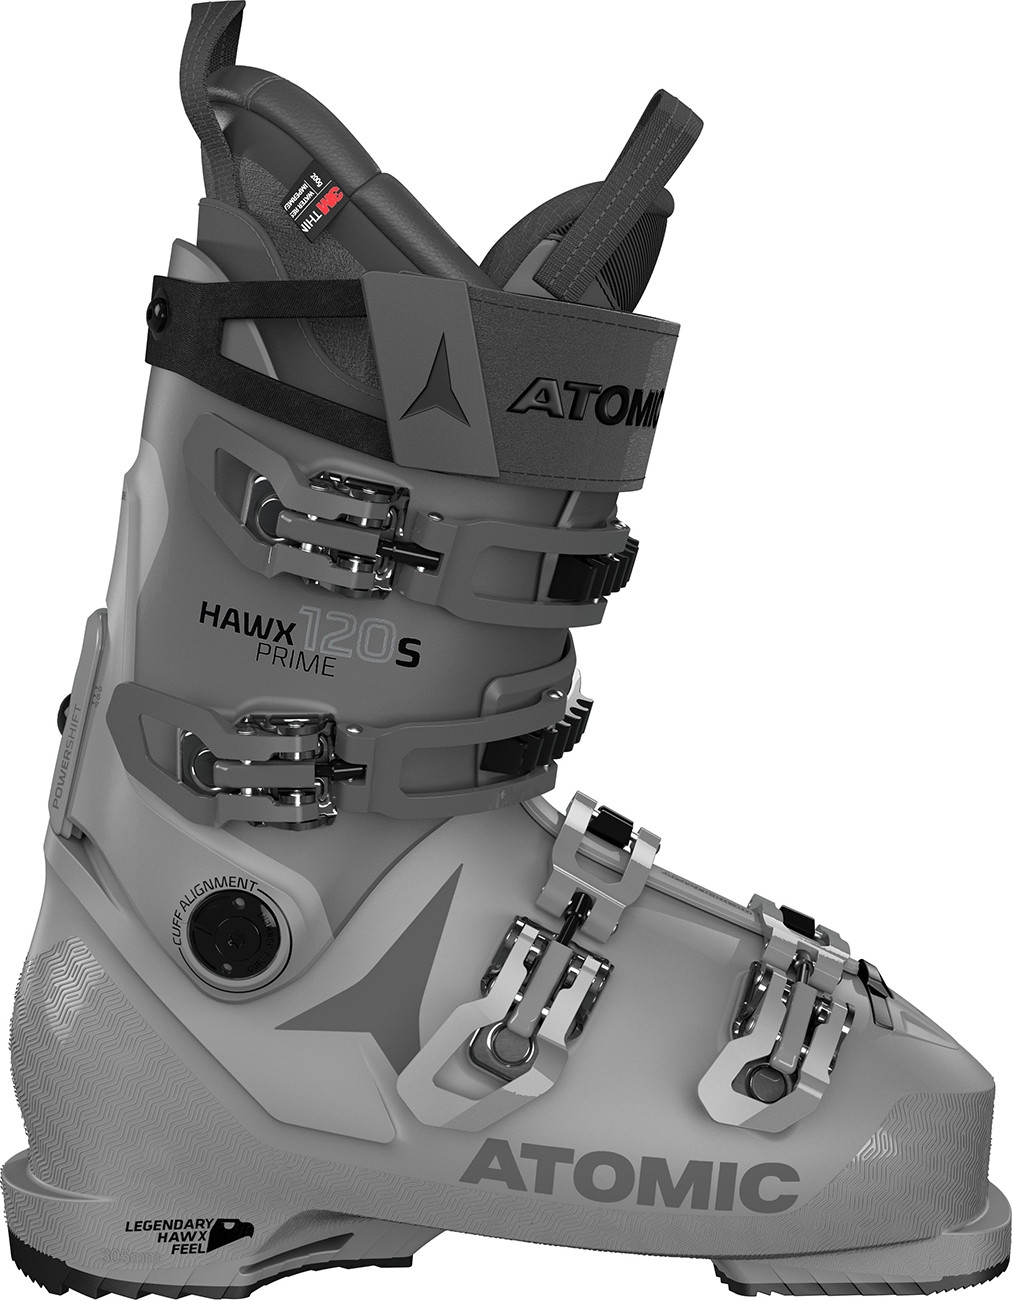 ATOMIC Hawx Prime 120 S Skischuhe 2020/21